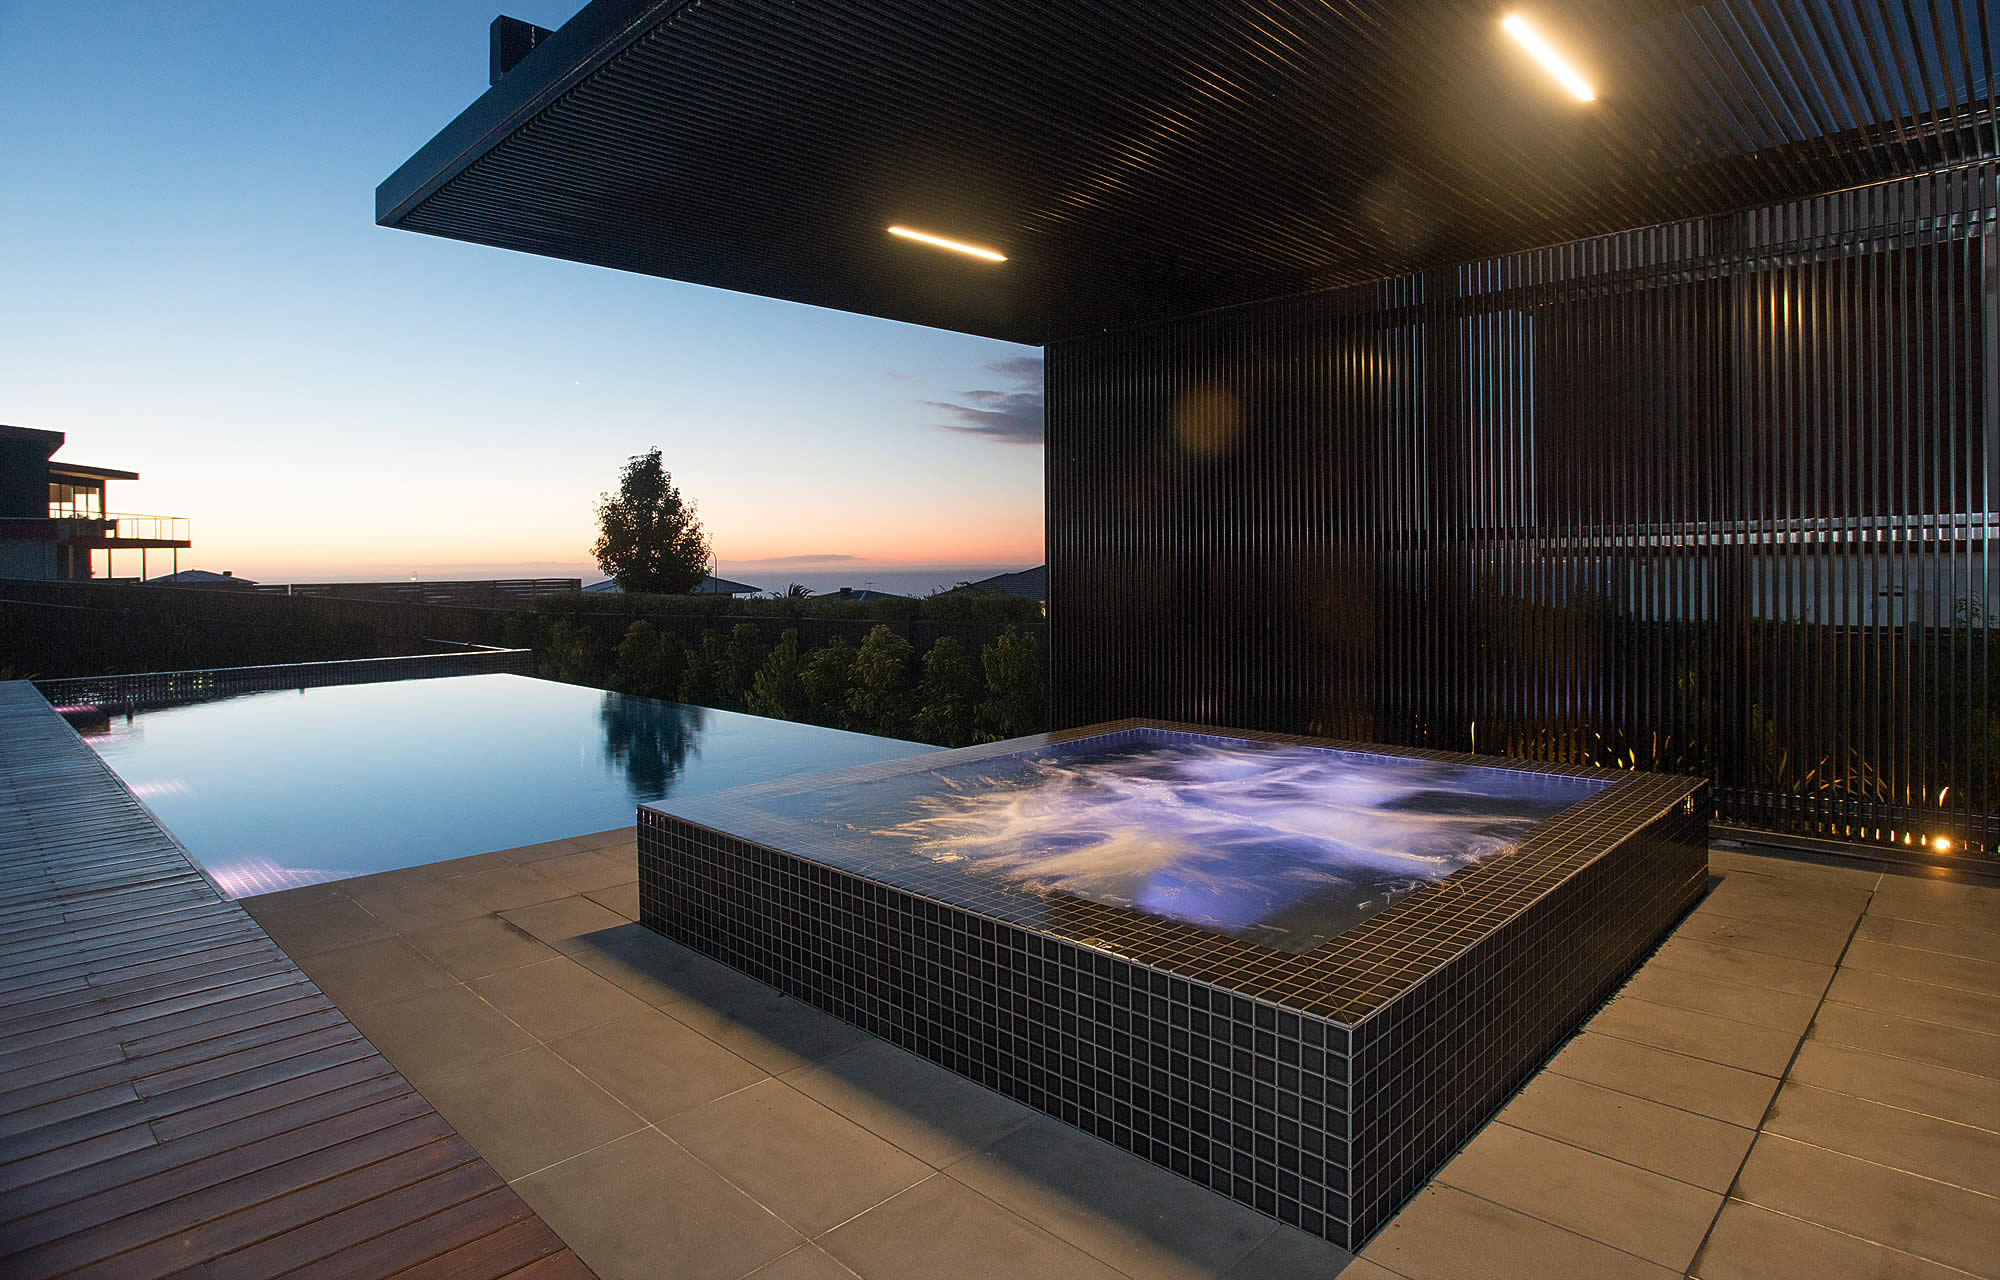 OFTB Melbourne Swimming Pool Builders Landscape Architecture